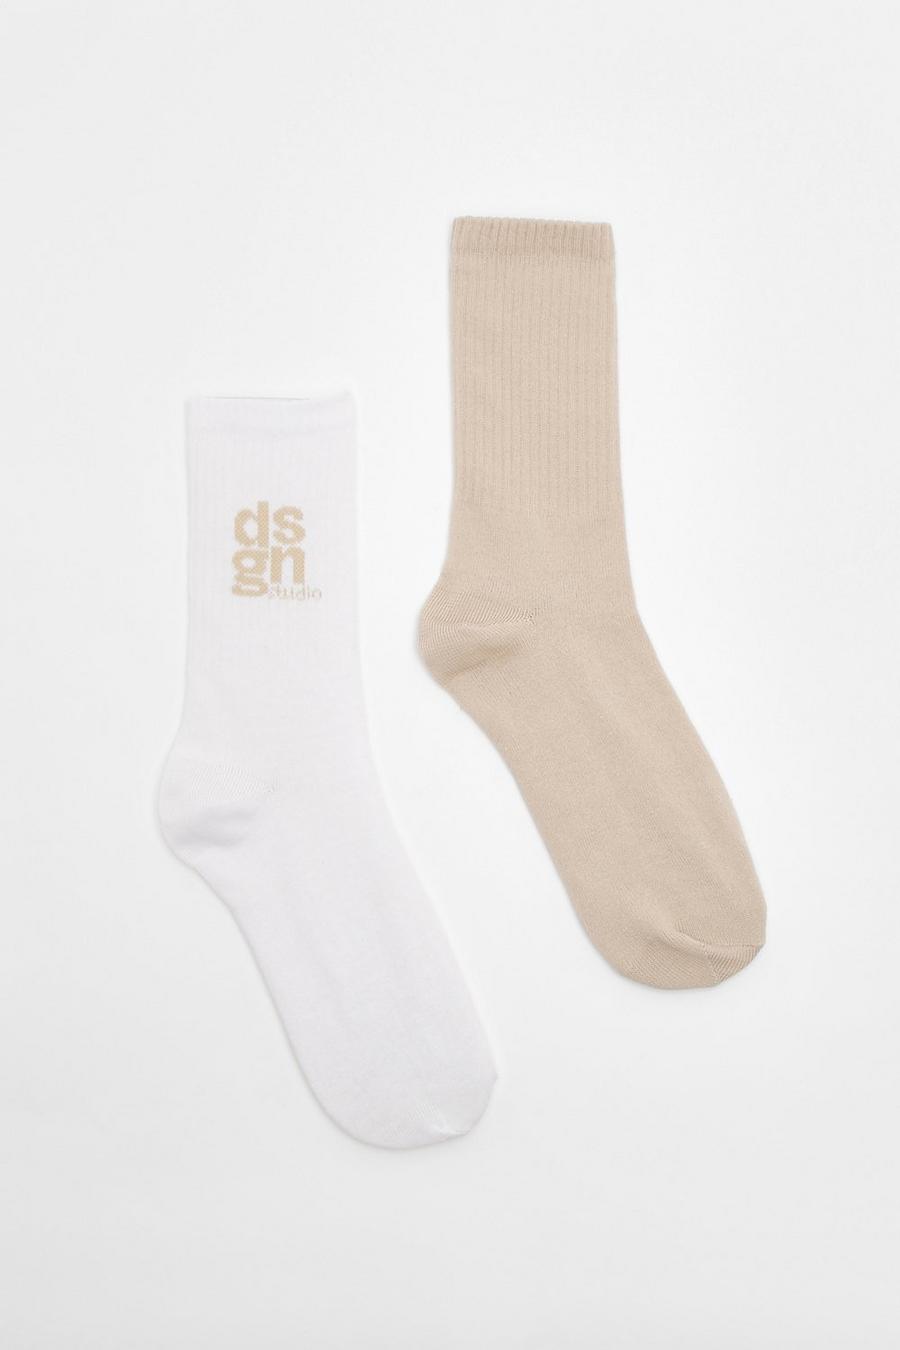 Pack de 2 pares de calcetines deportivos con eslogan Dsgn Studio, Cream image number 1